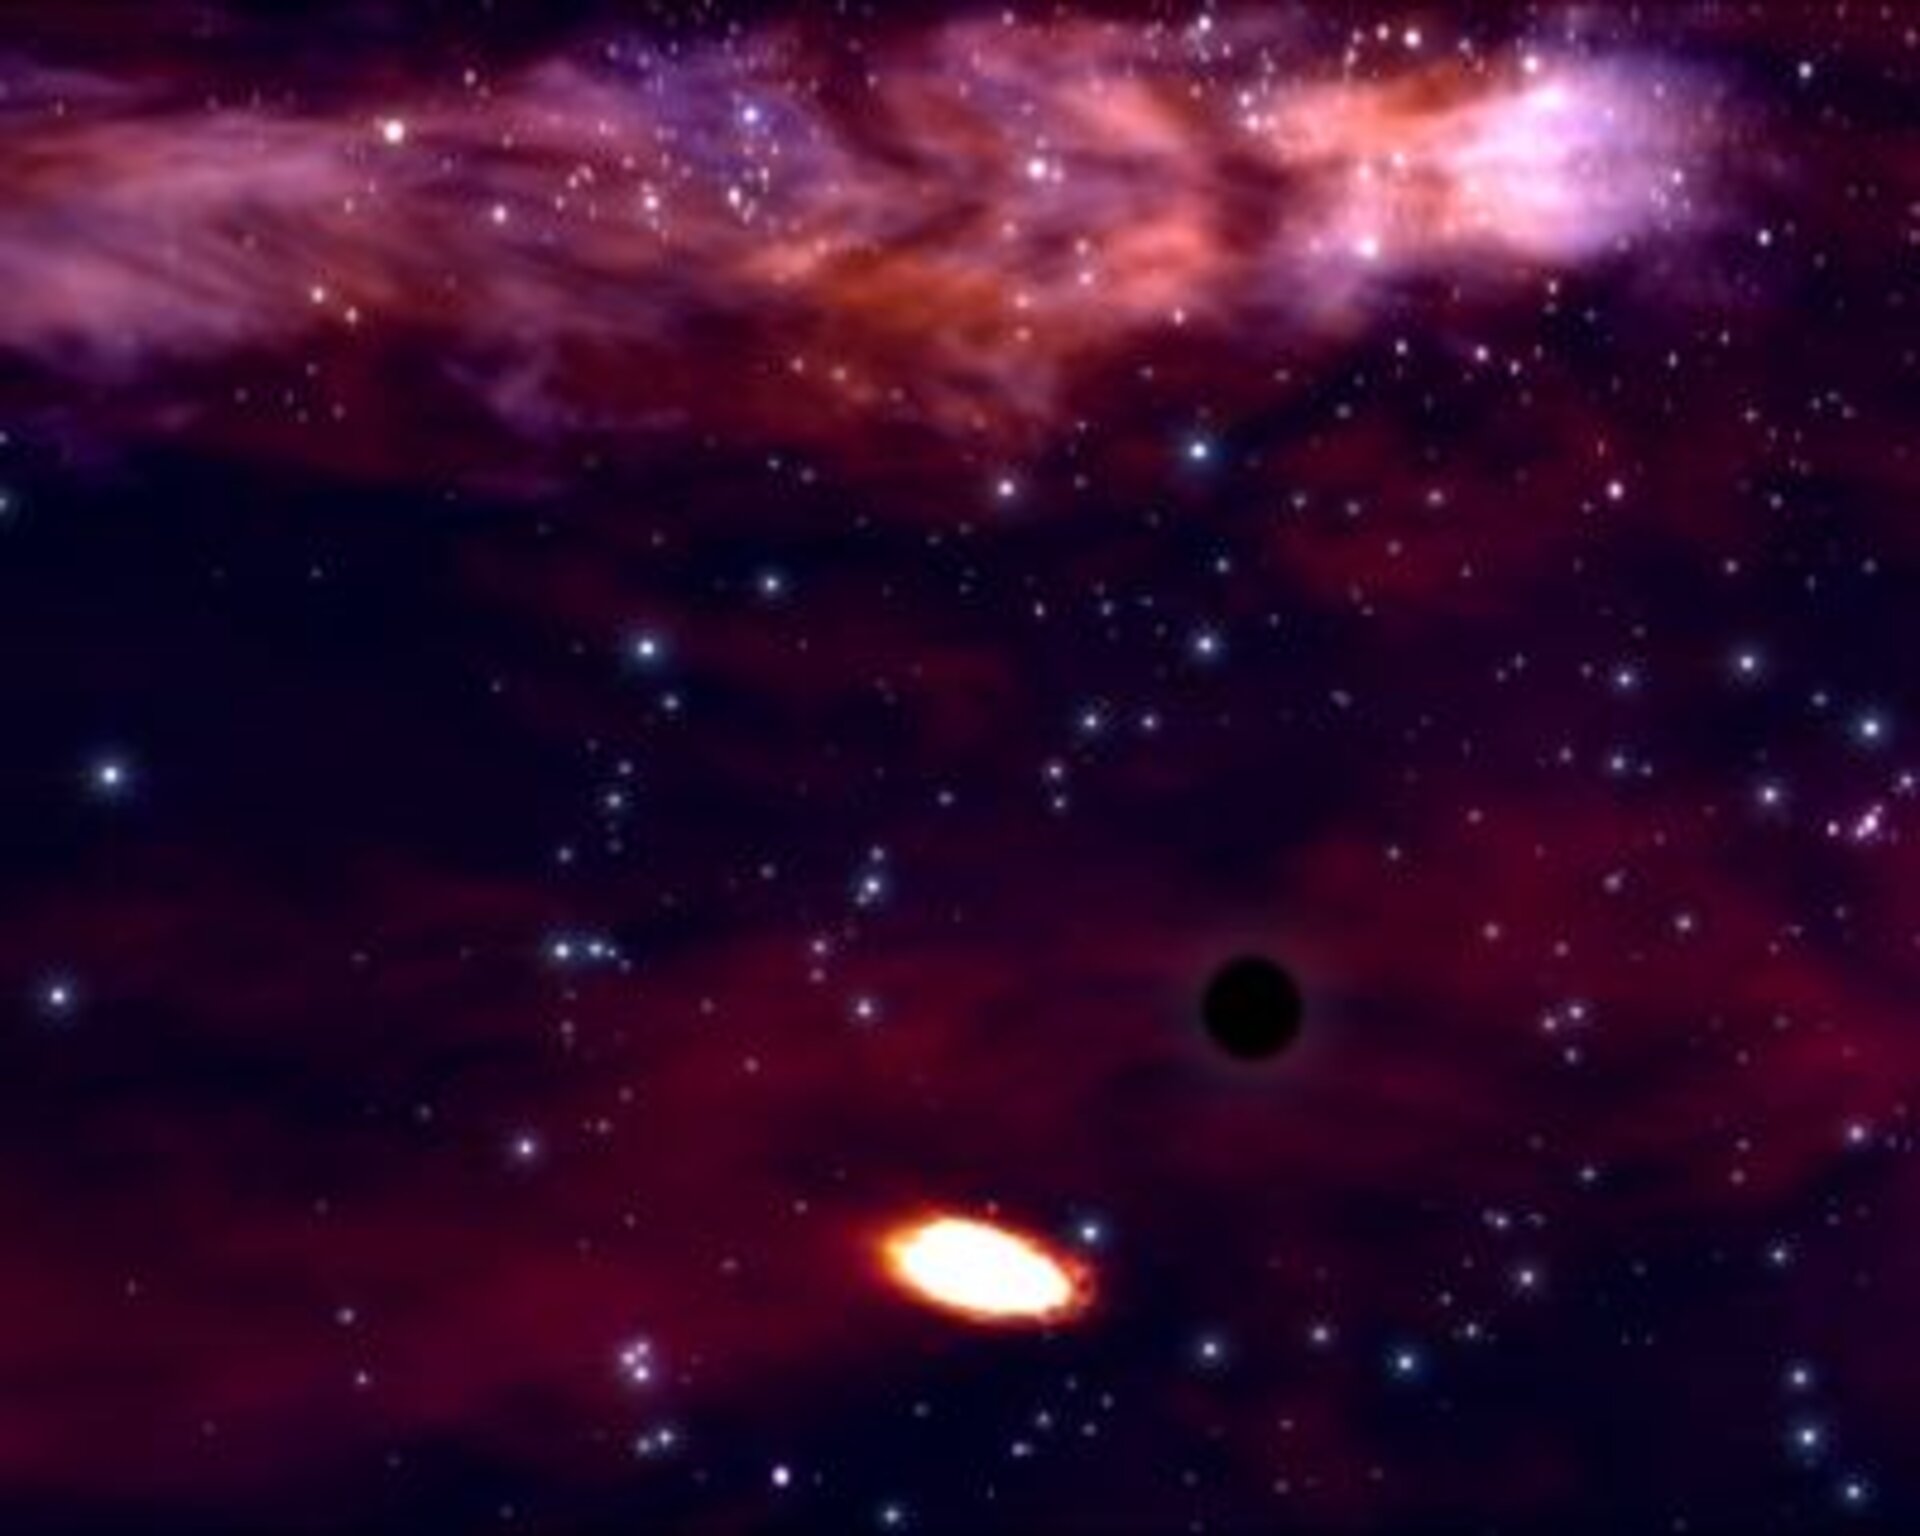 Giant black hole rips star apart - panel detail